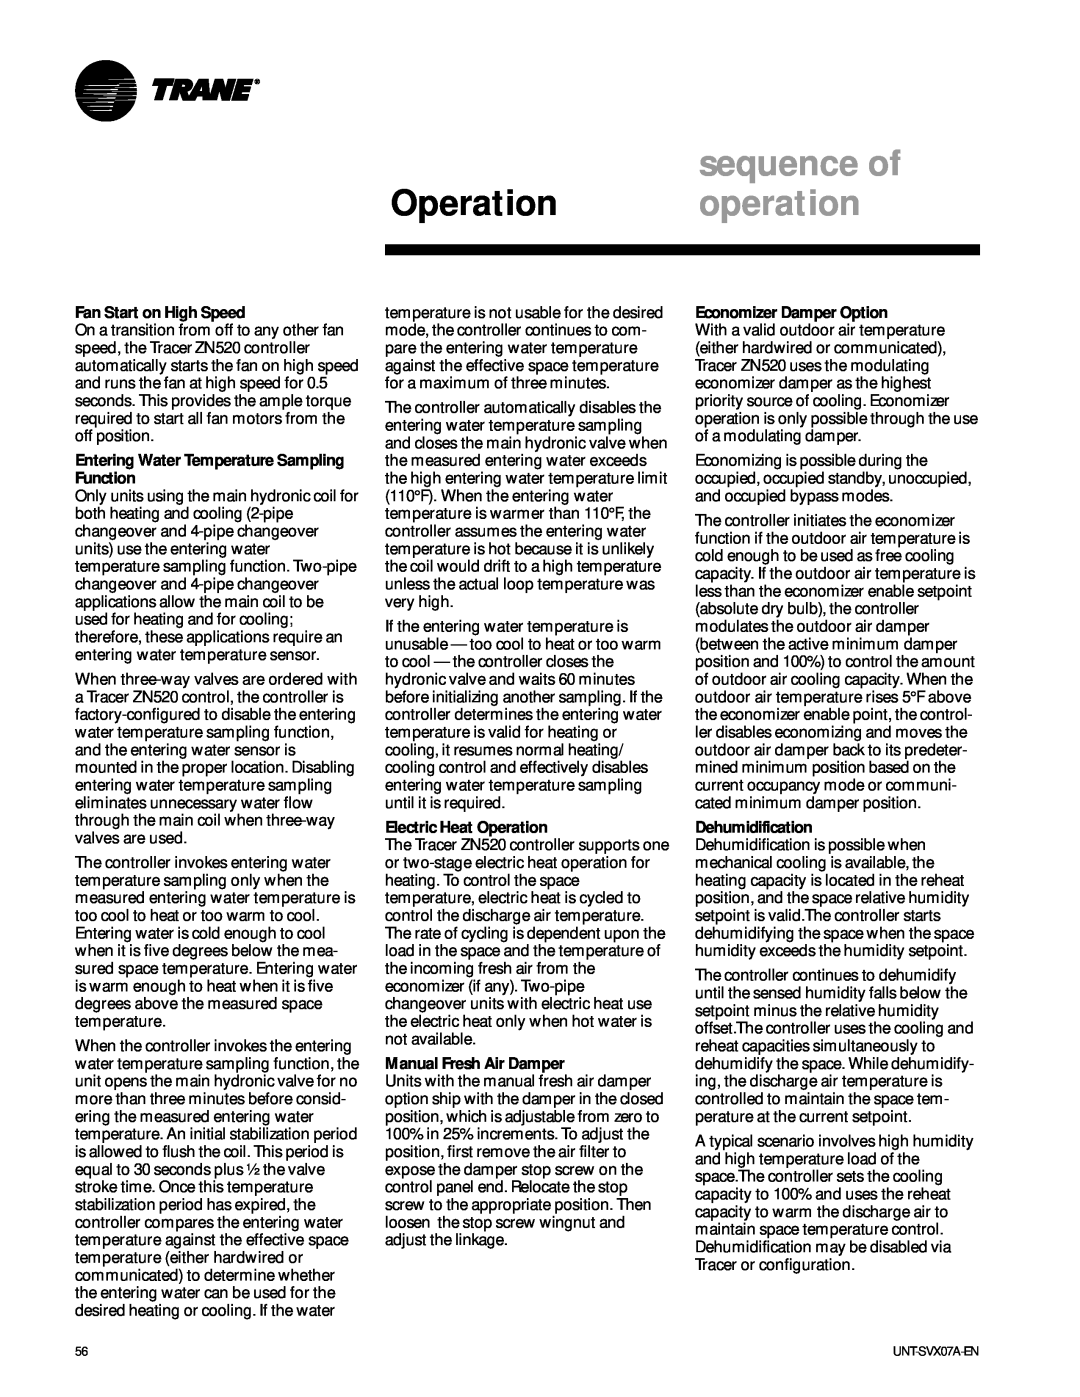 Trane UNT-SVX07A-EN manual sequence of, Operation operation, Fan Start on High Speed, Electric Heat Operation 